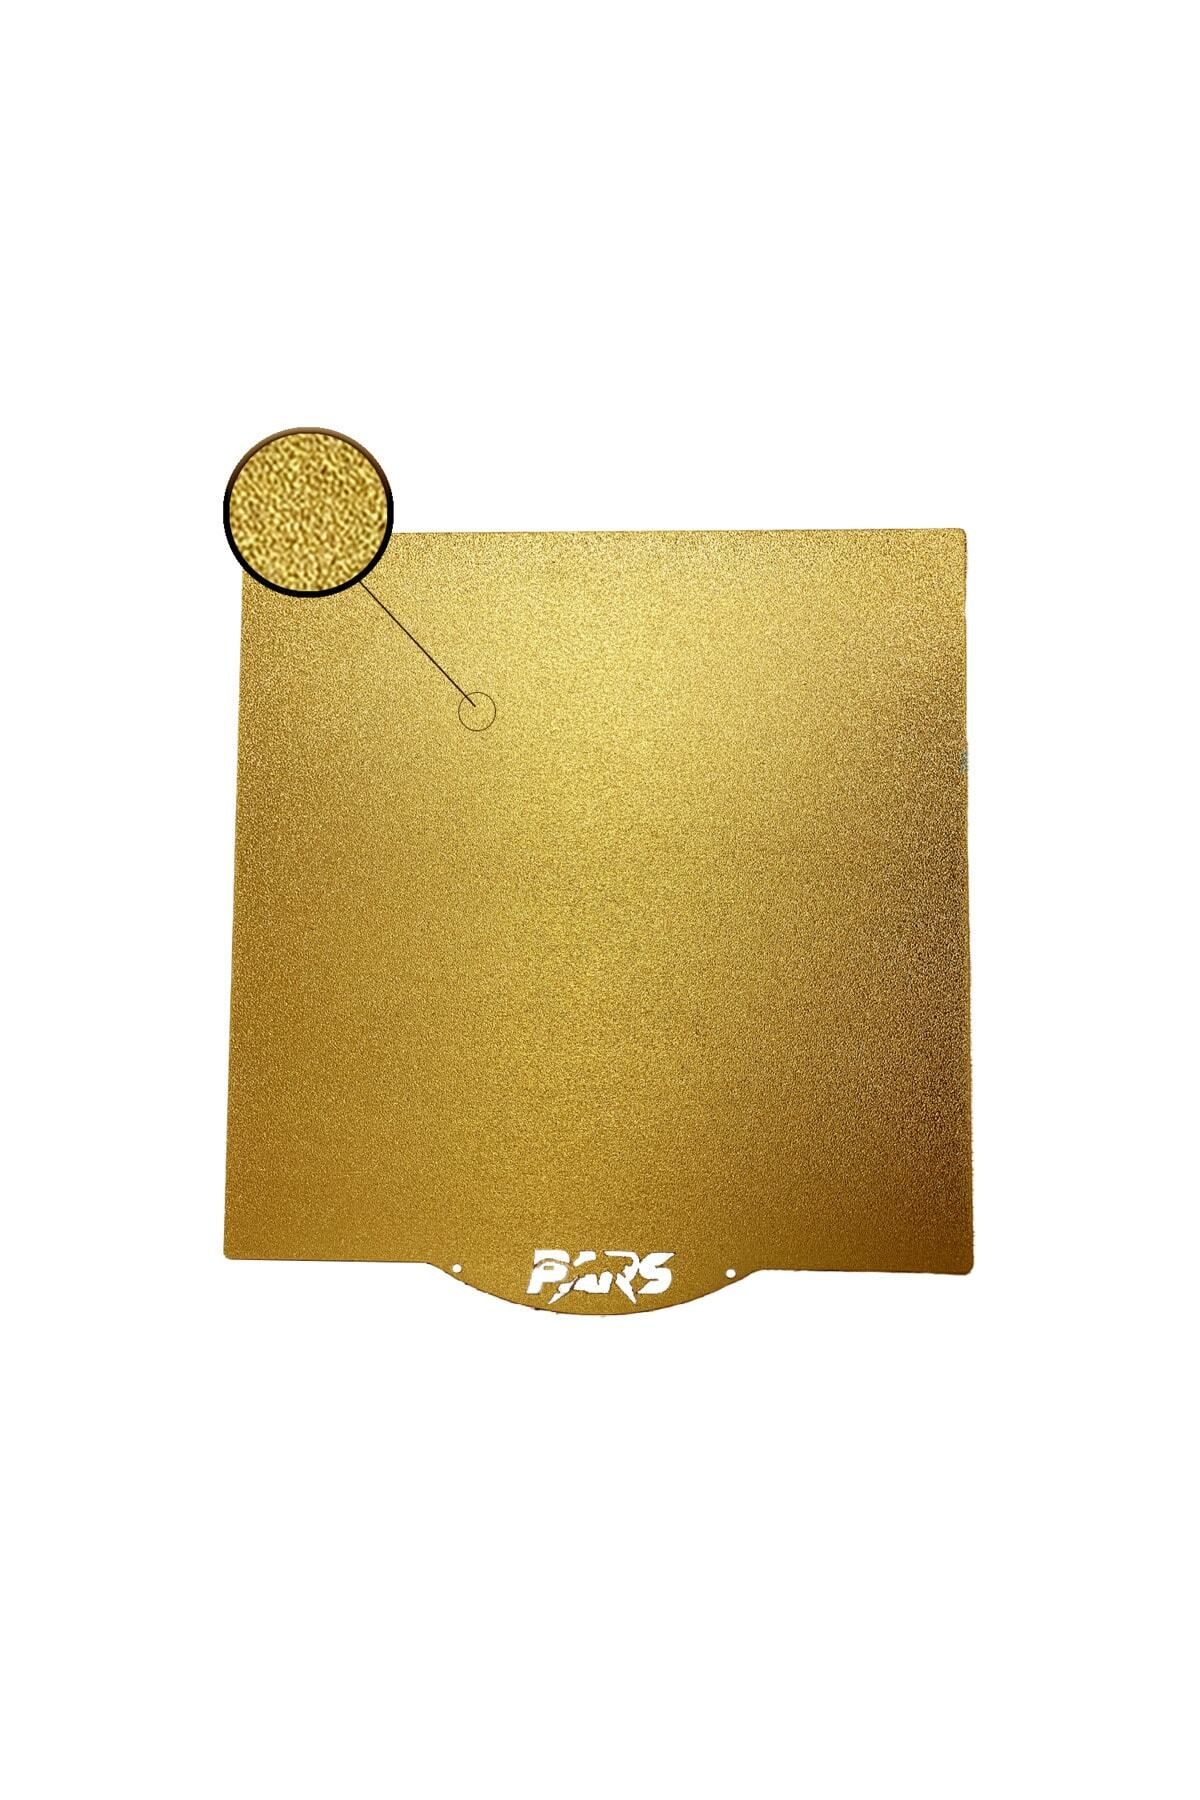 Pars 310x310 Mm Gold Pei Kaplı Özel Yay Çeliği Tabla Magnetsiz